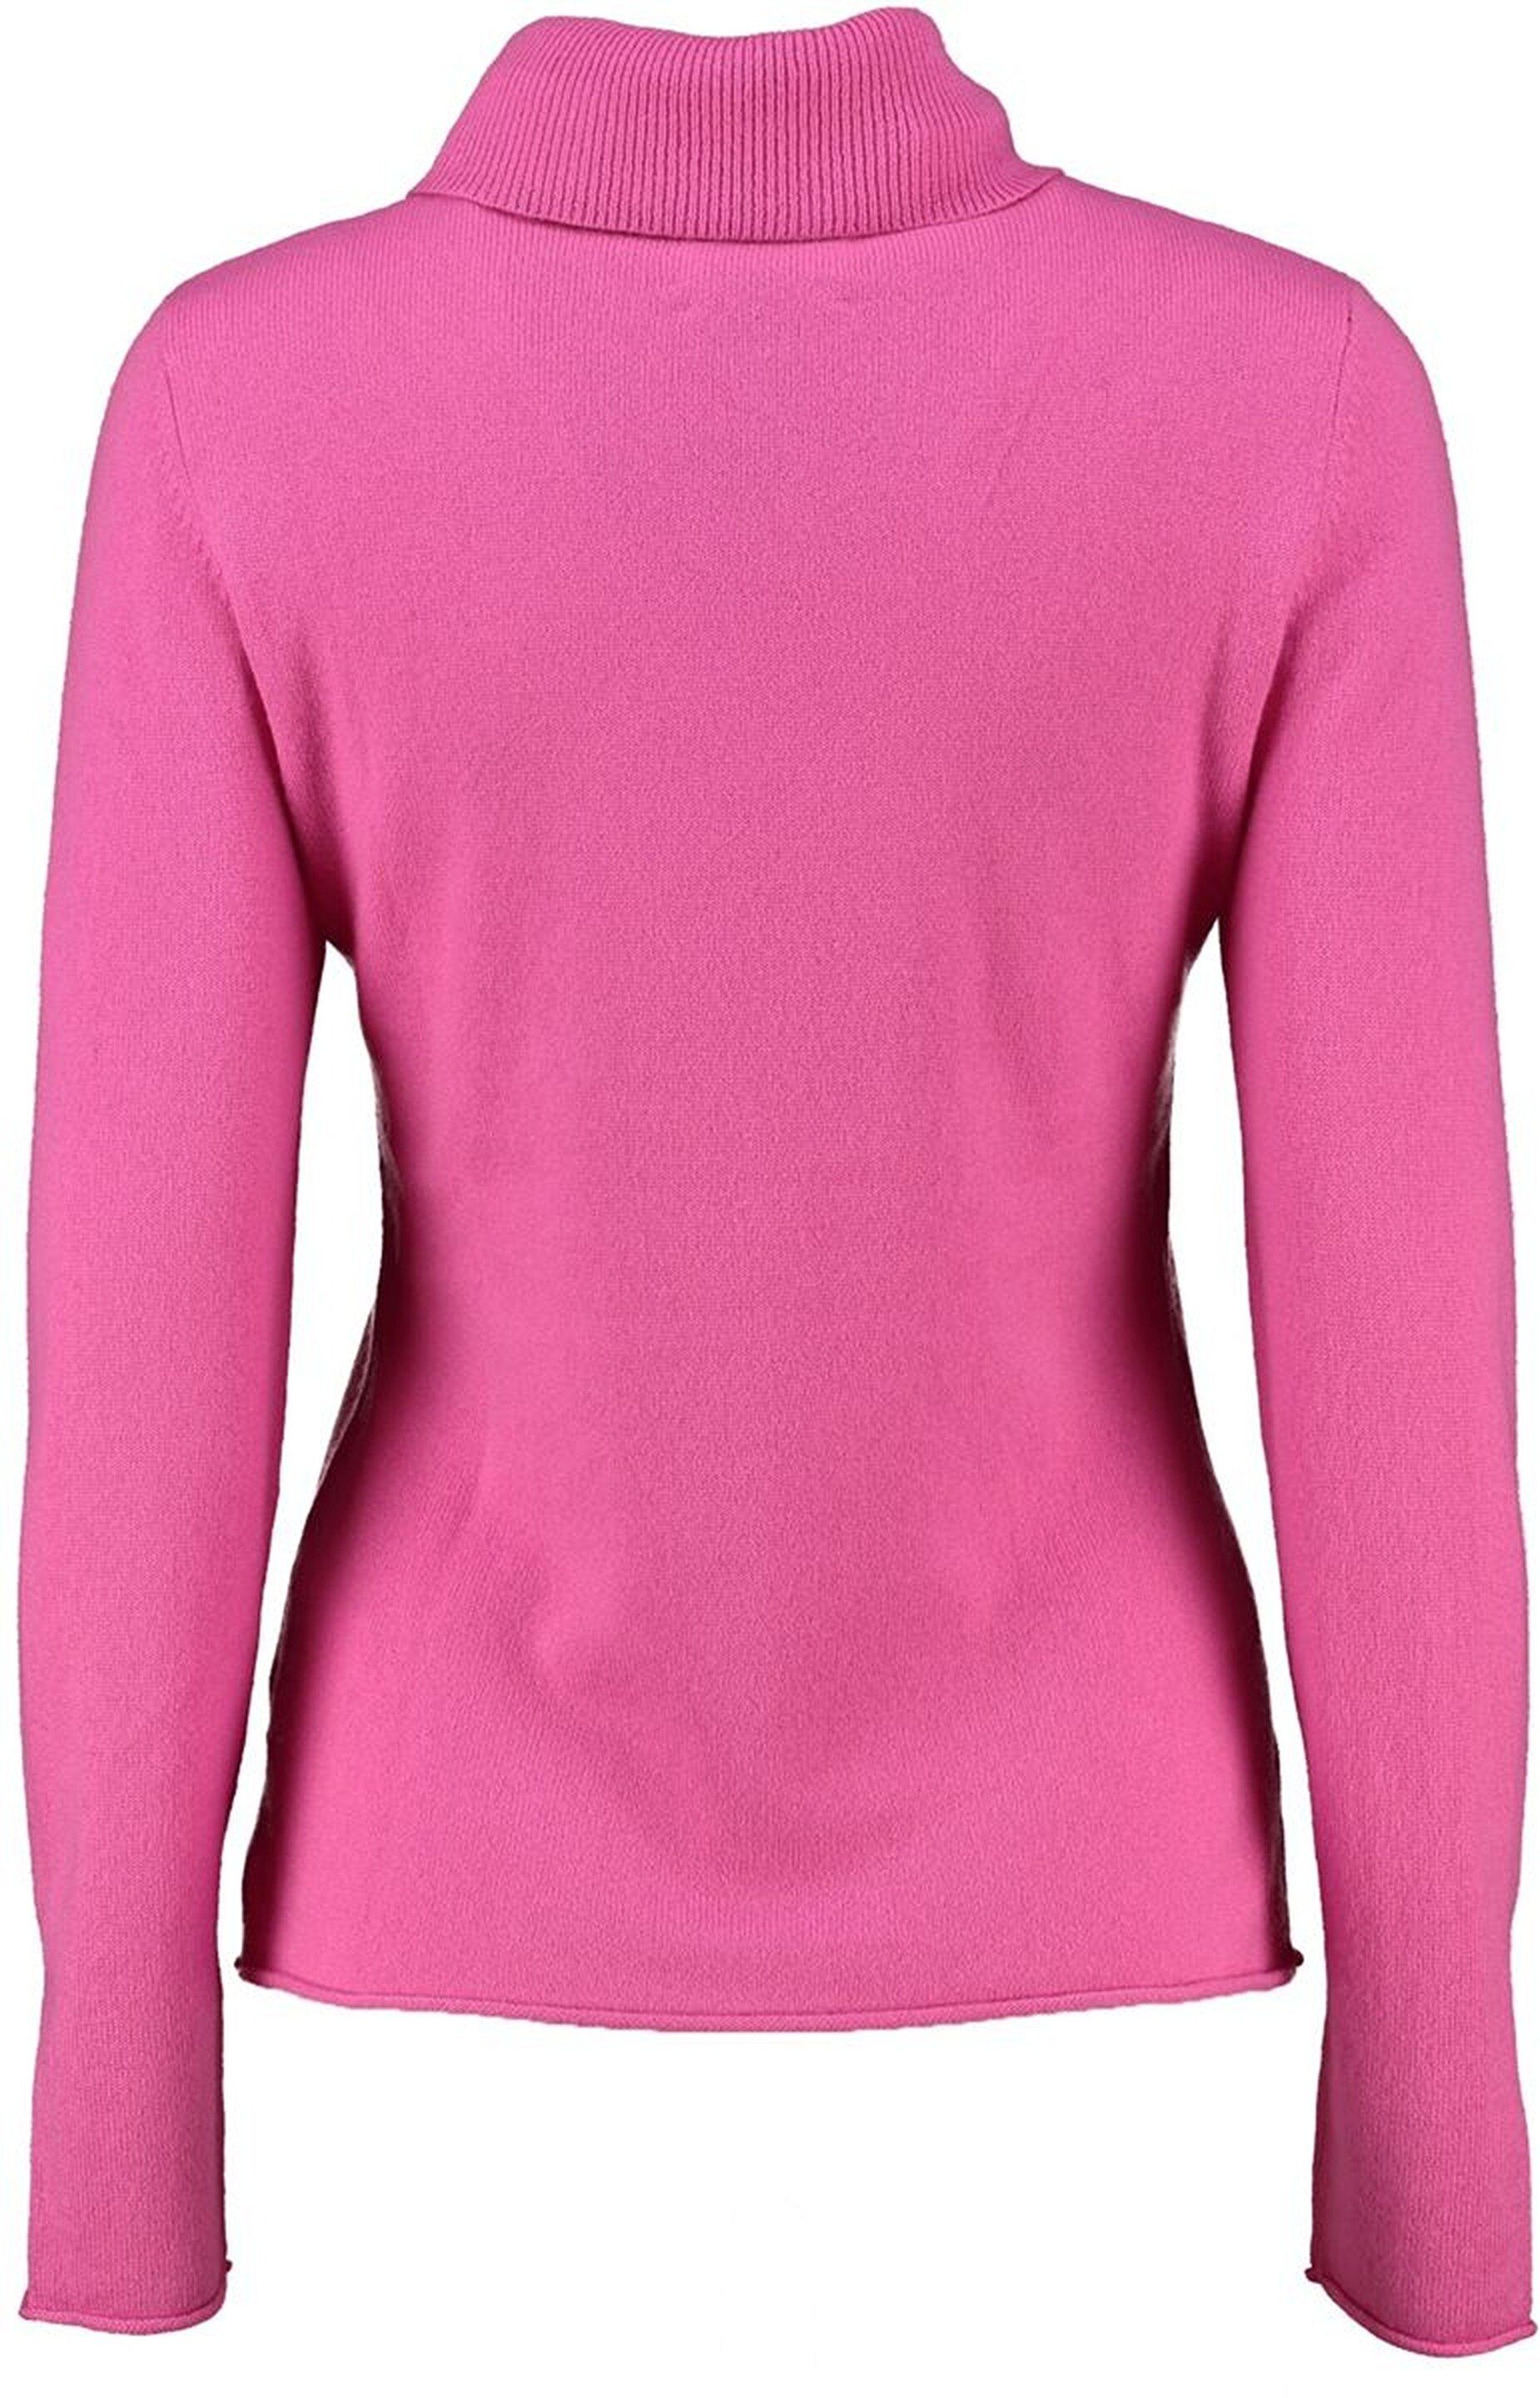 Rollkragenpullover hochwertigem aus Kaschmir Rollkragen-Pullover pink FYNCH HATTON FYNCH-HATTON